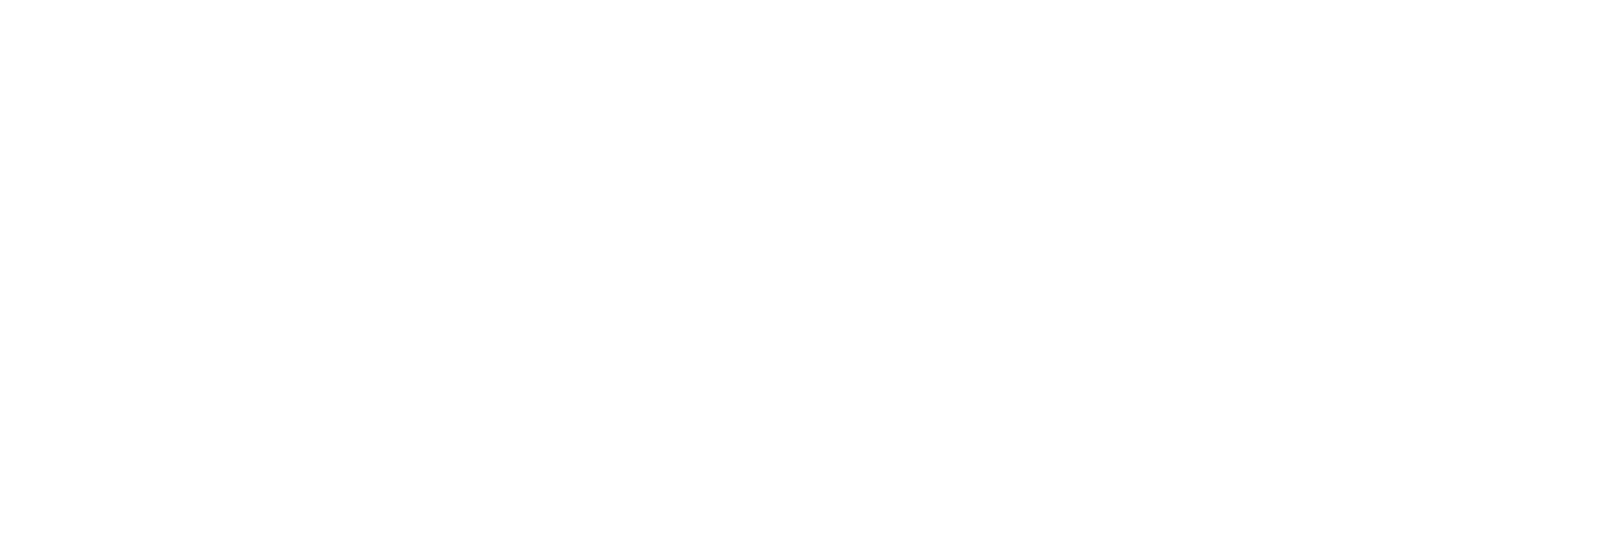 Bin Gair Company – شركة بن قير